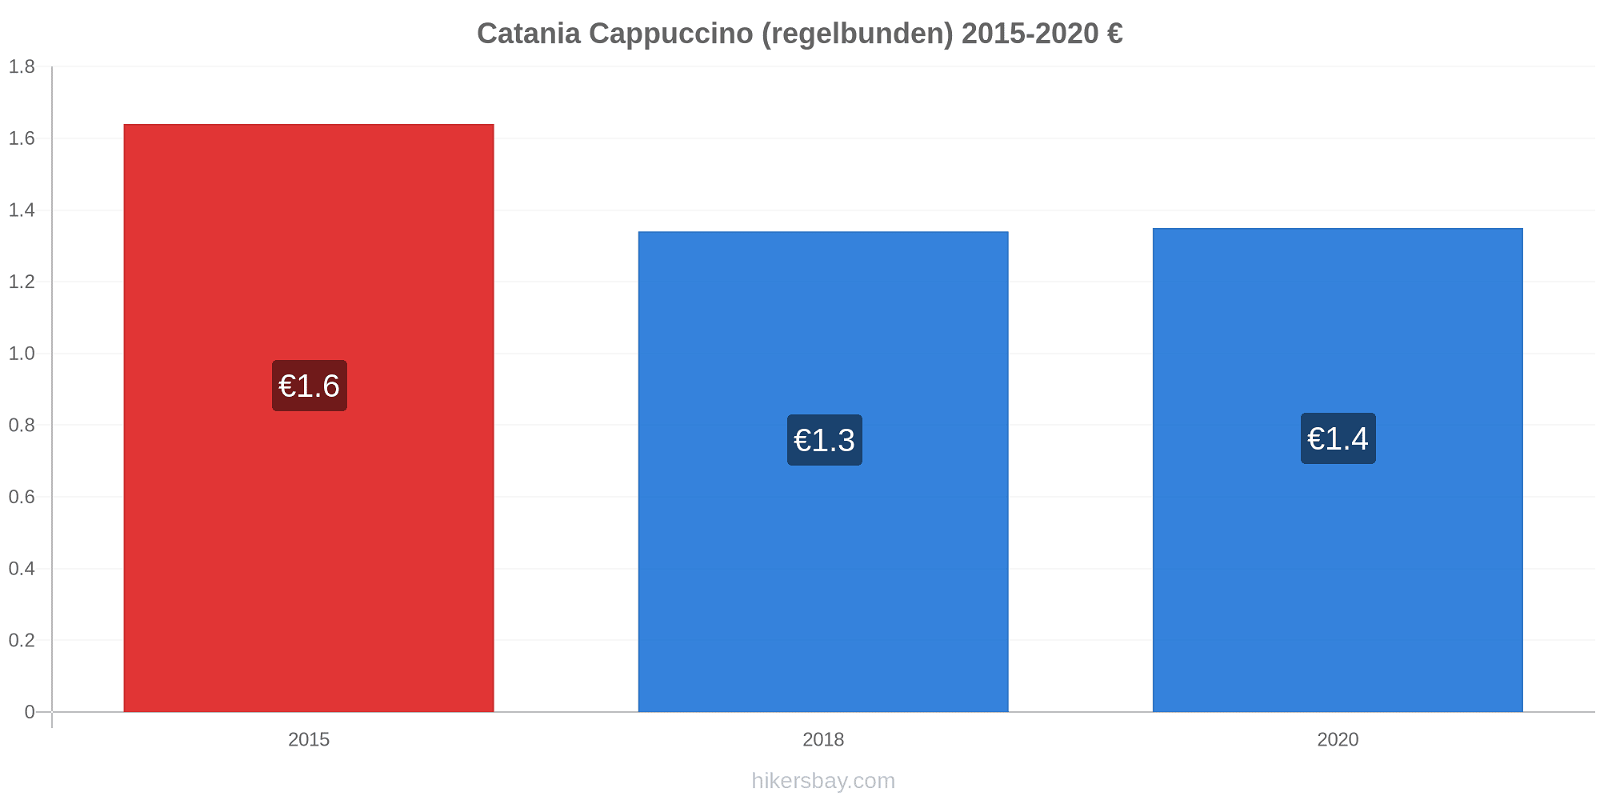 Catania prisförändringar Cappuccino (regelbunden) hikersbay.com